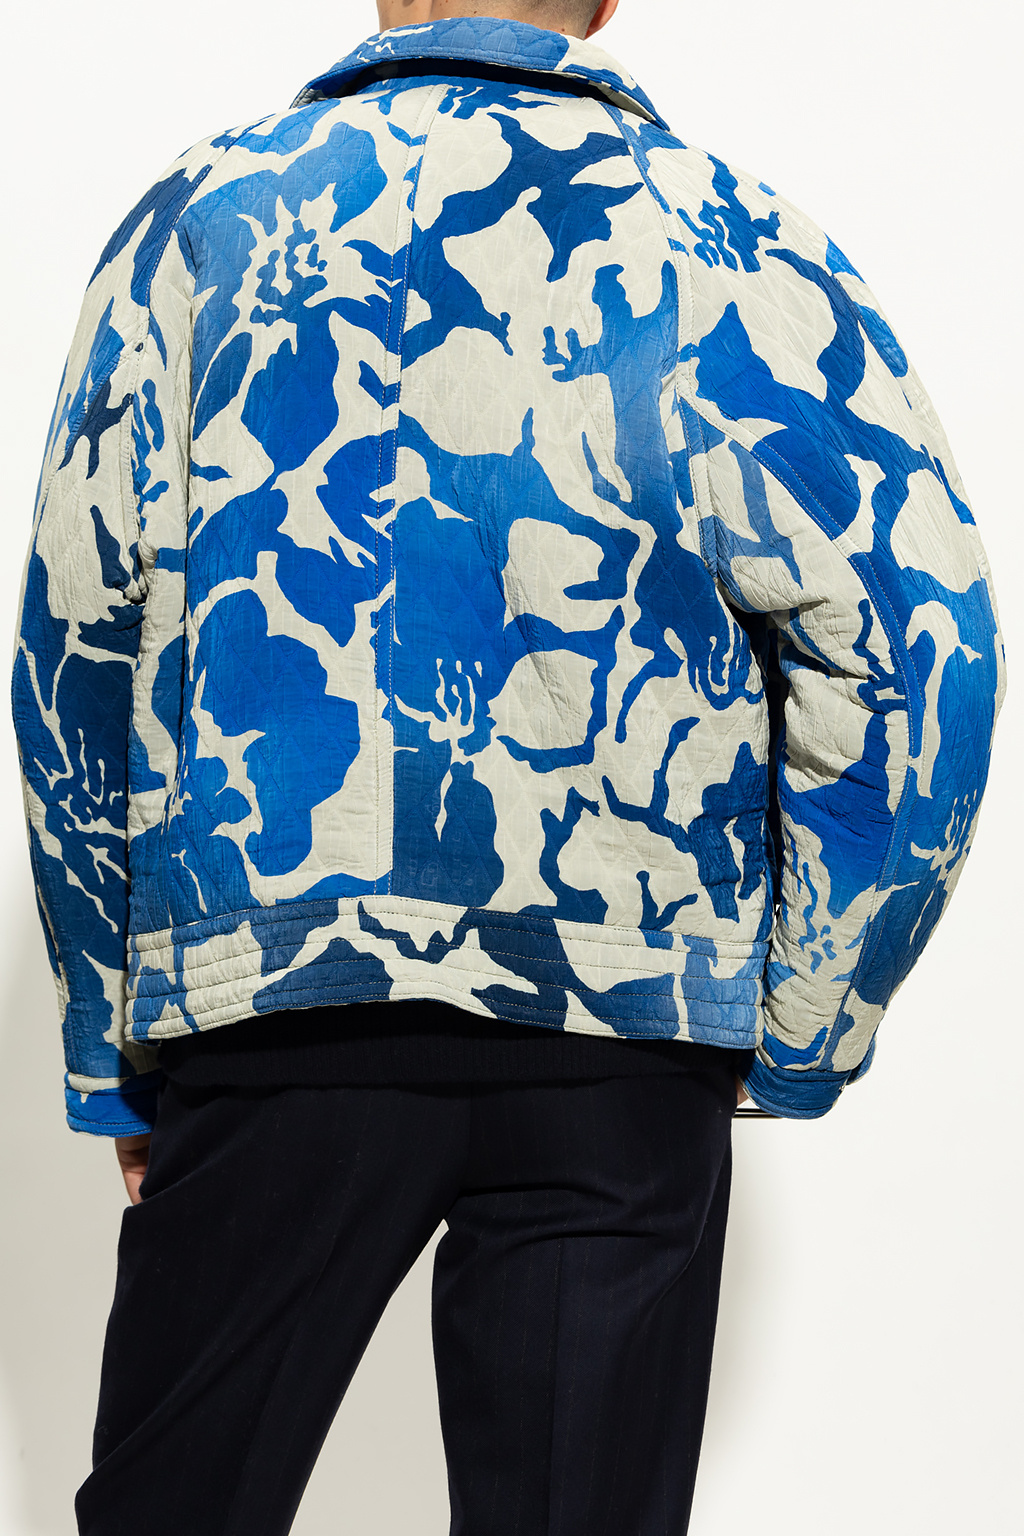 Ice Tech Jackets Patterned jacket